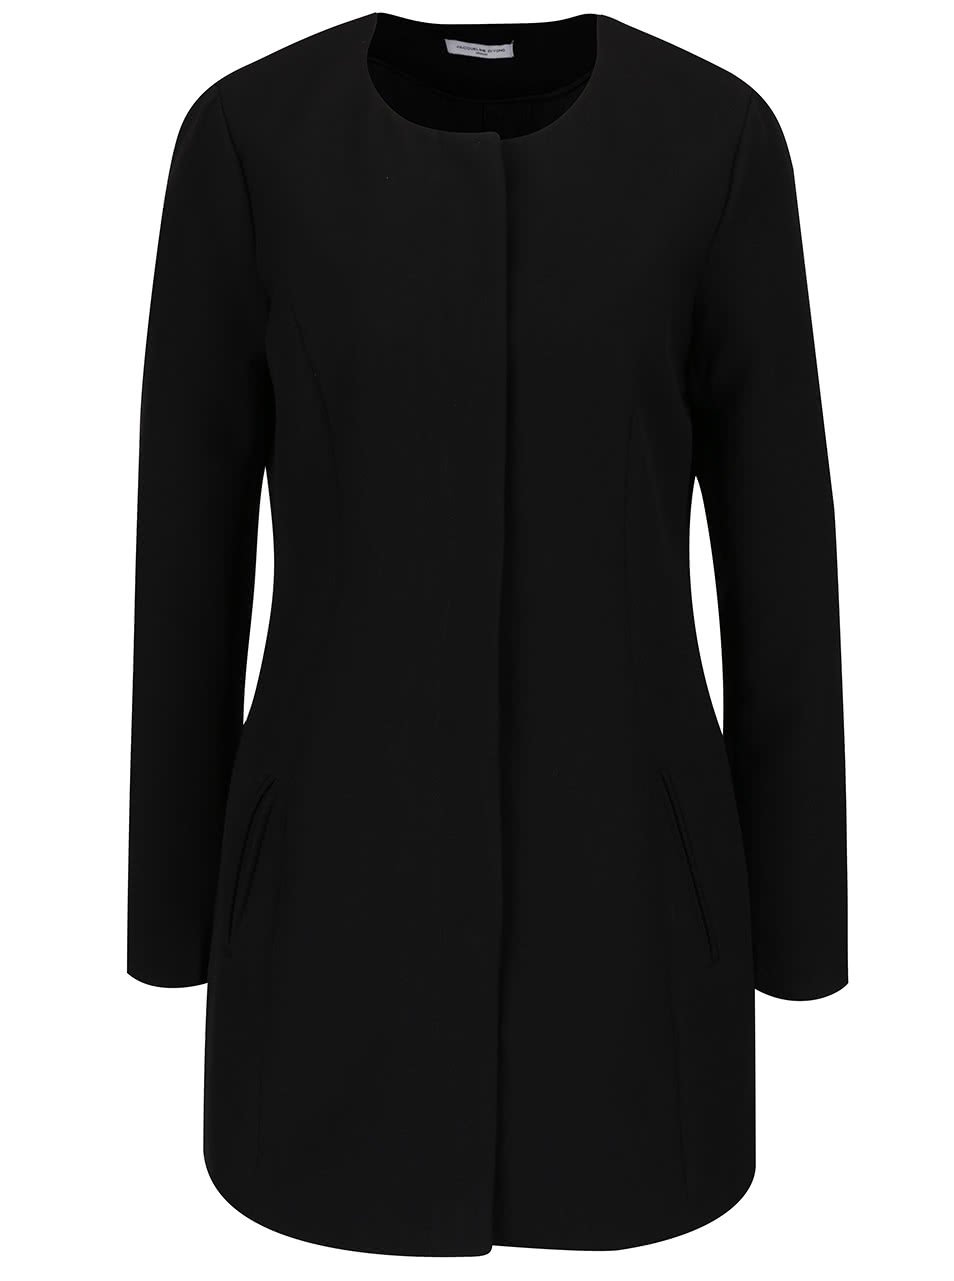 Černý kabát Jacqueline de Yong New Brighton